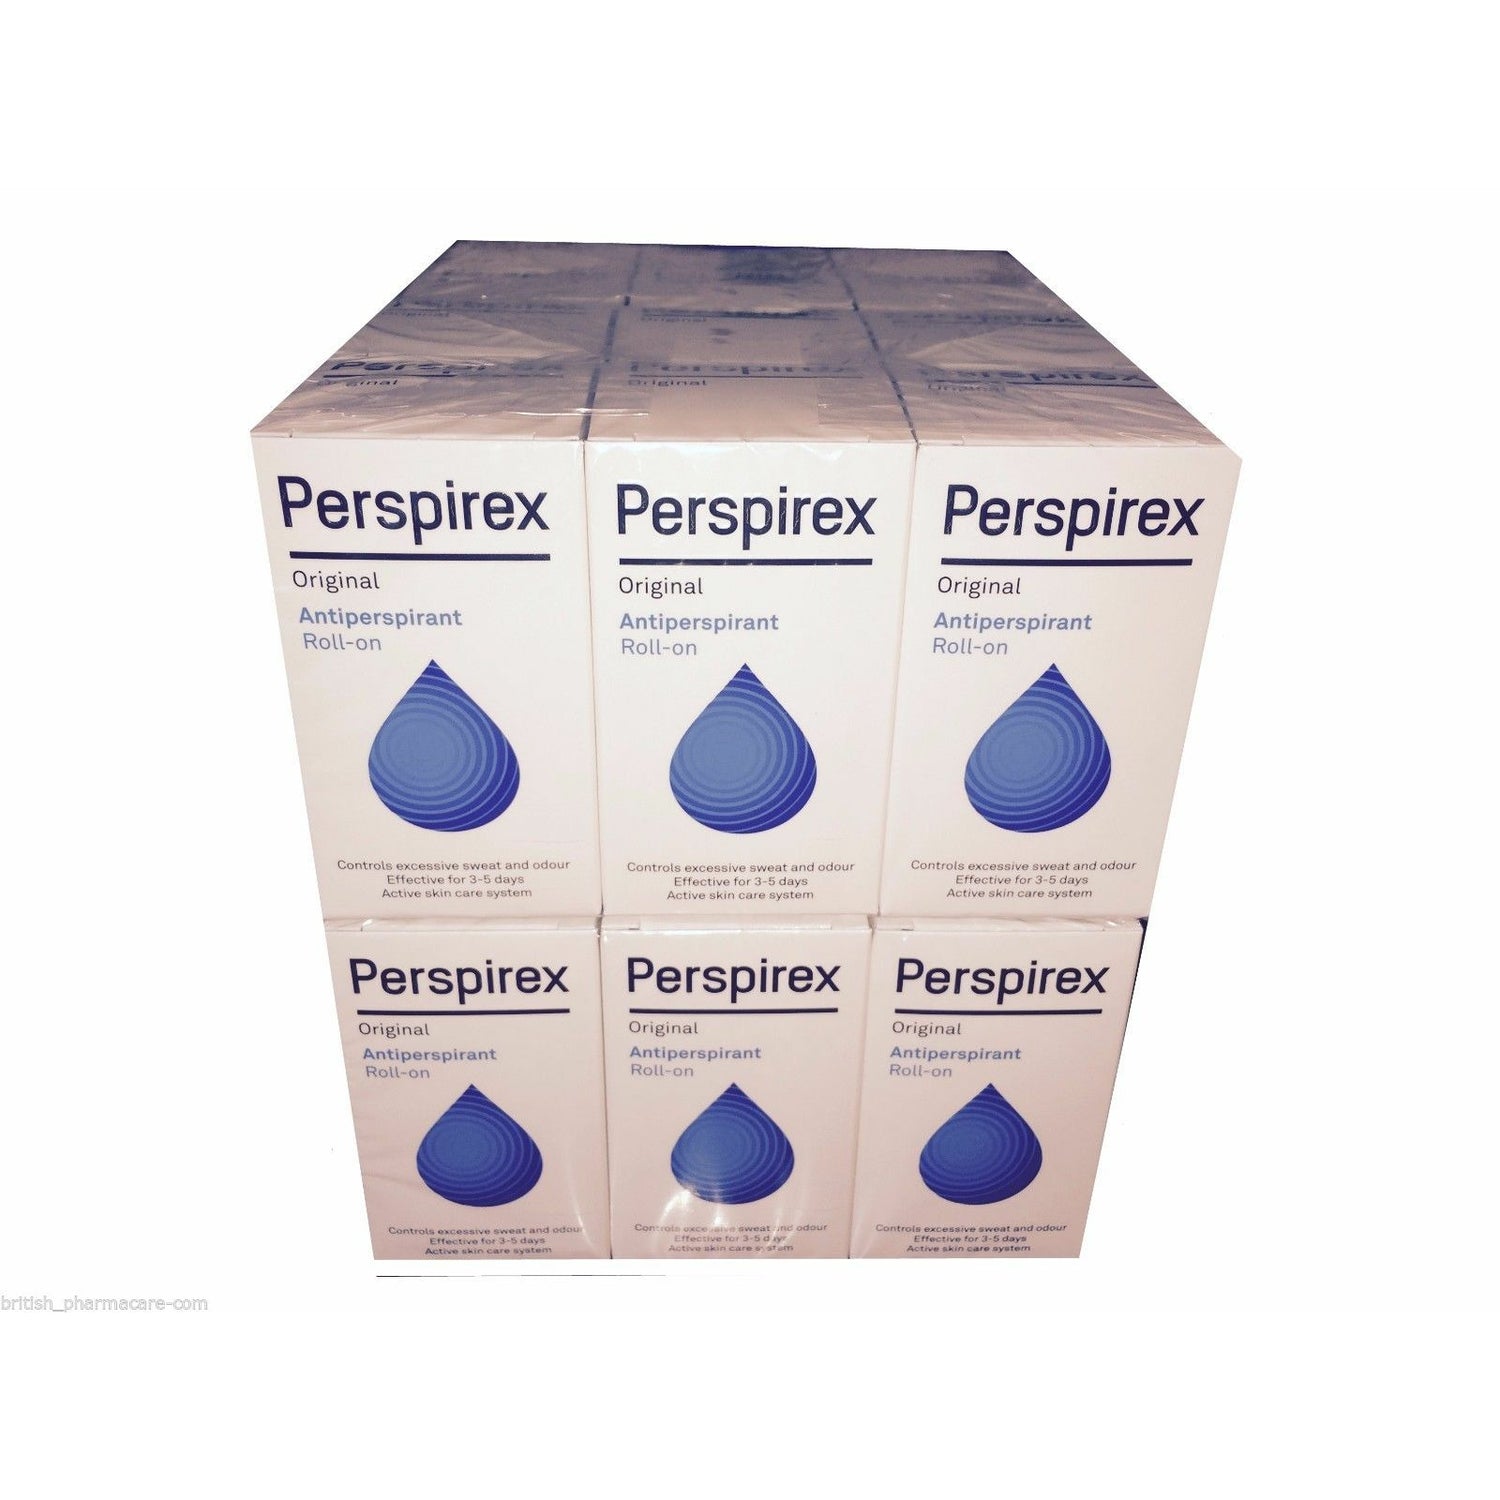 Perspirex Comfort Antiperspirante Roll-on, 20 ml.